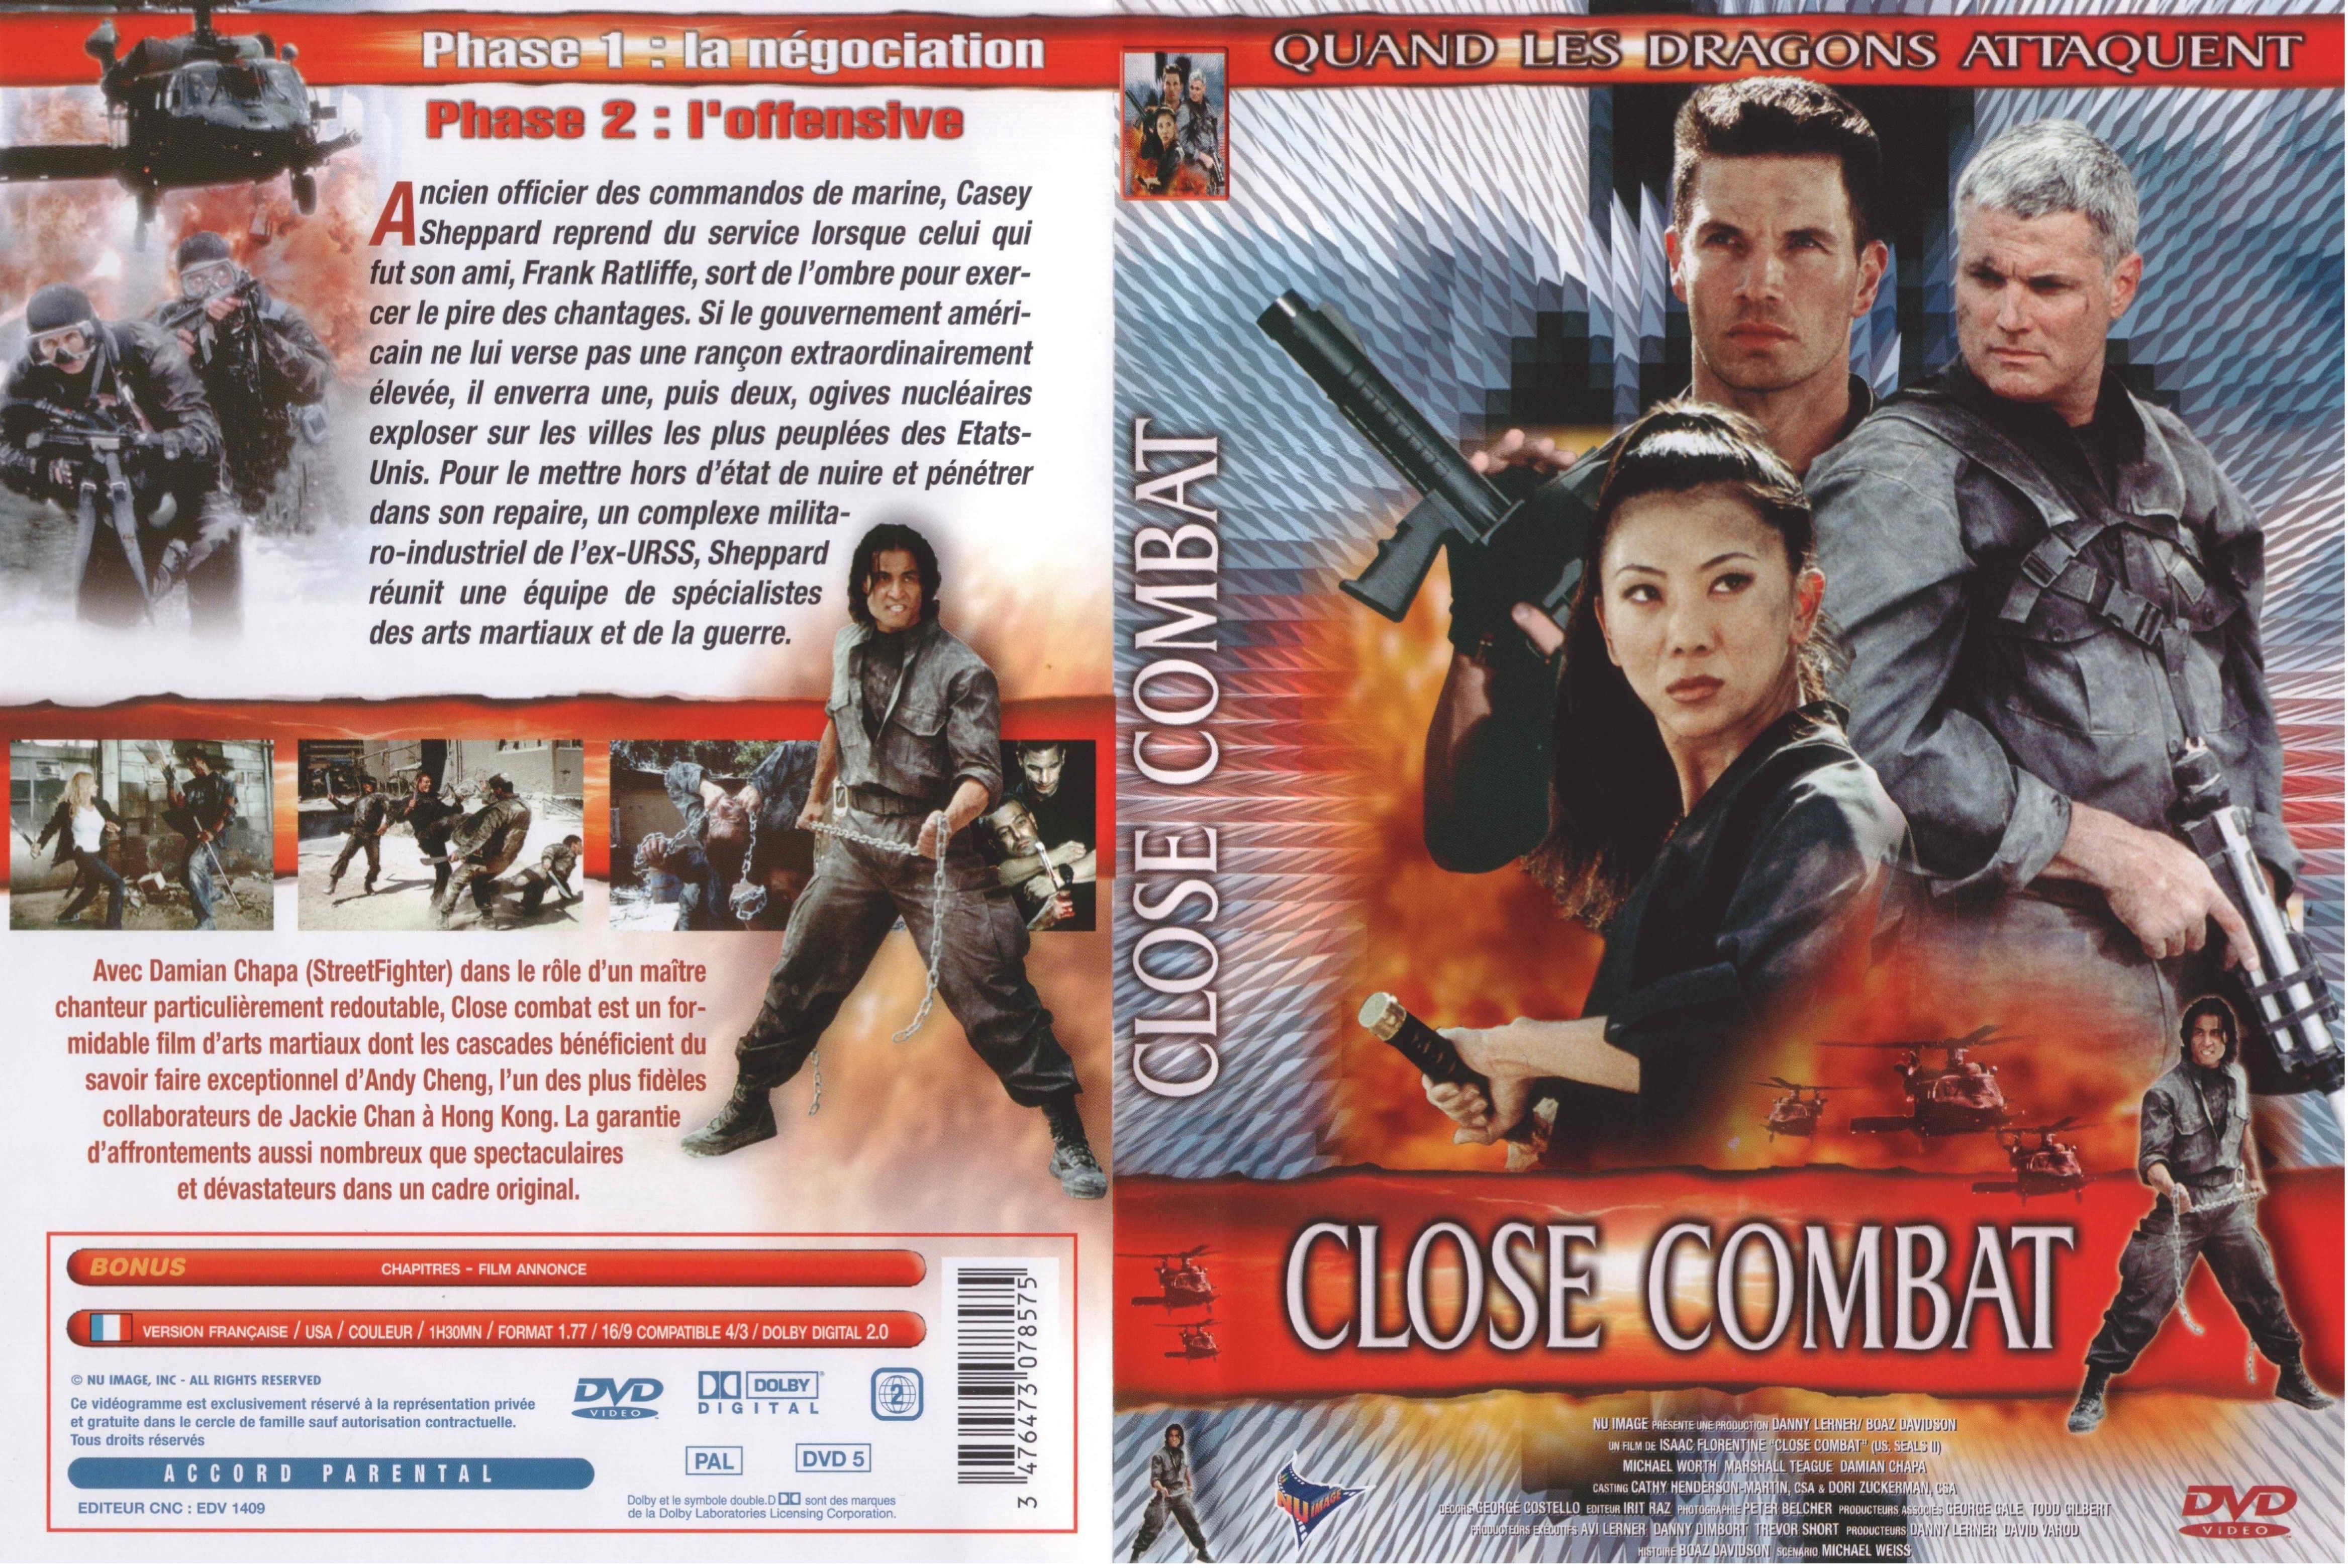 Jaquette DVD Close combat